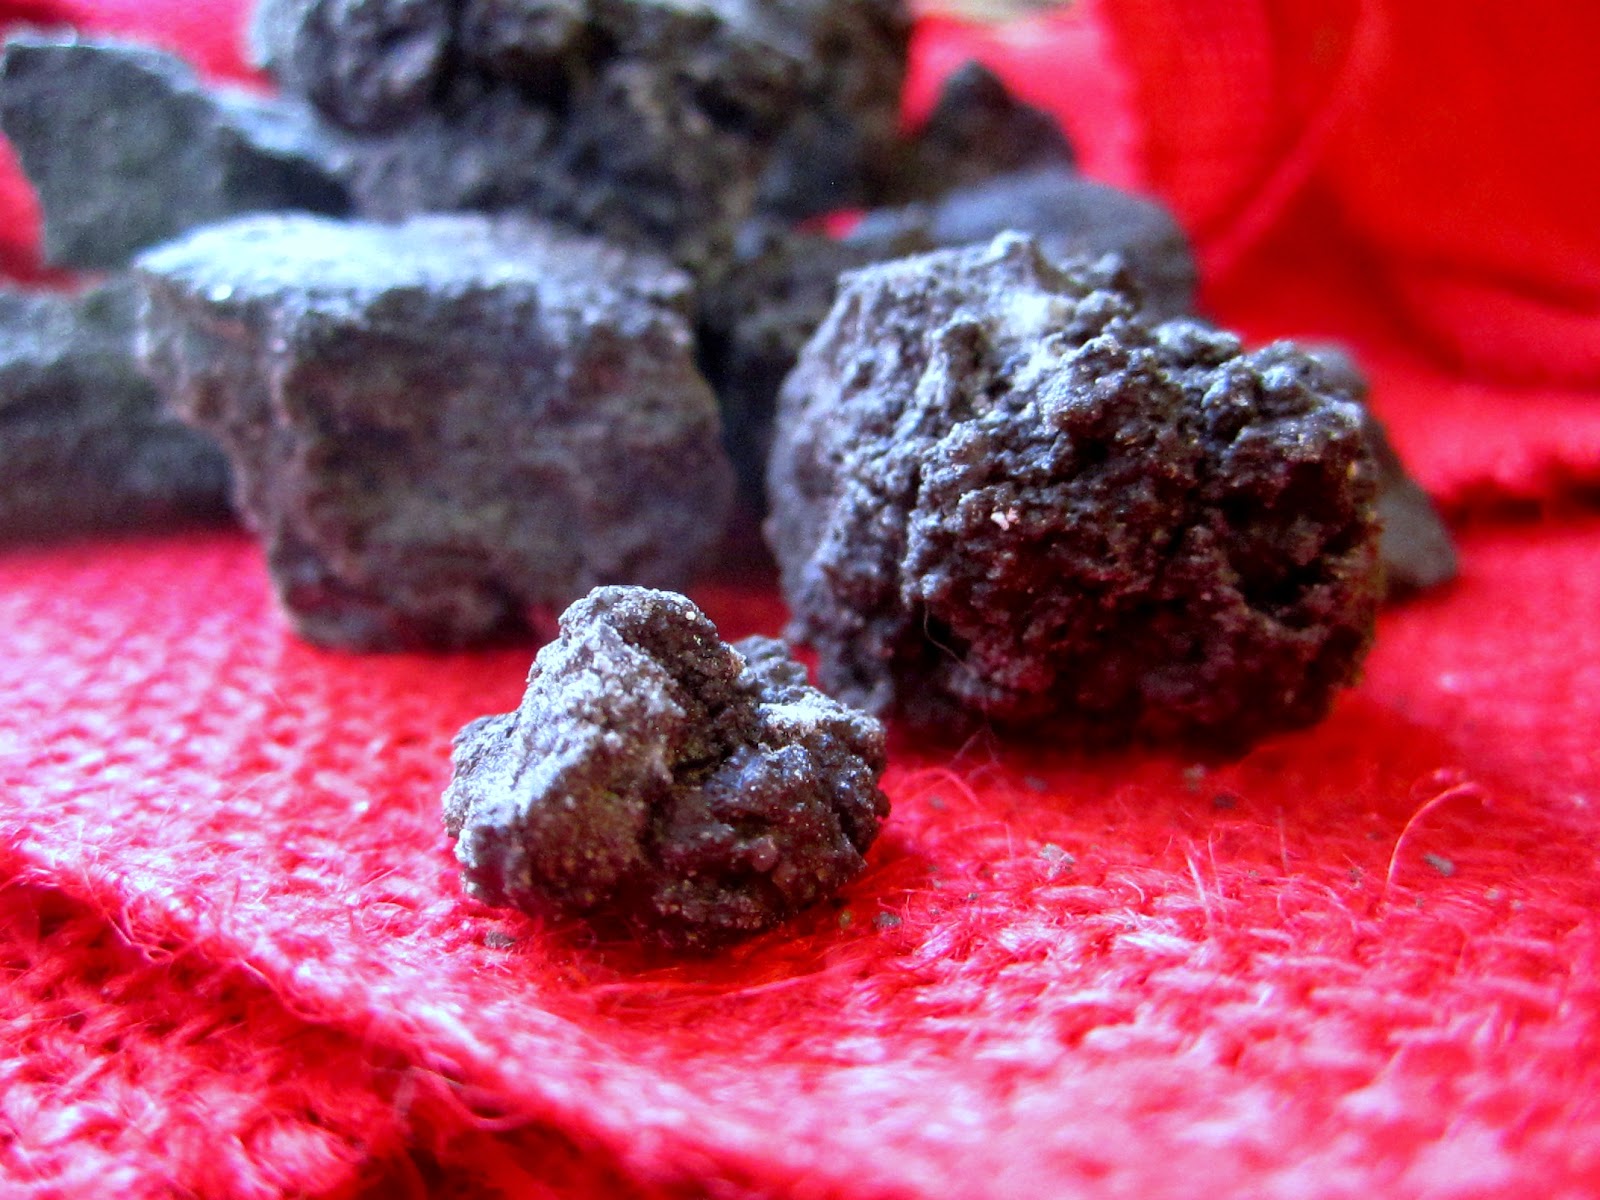 Christmas Coal Candy